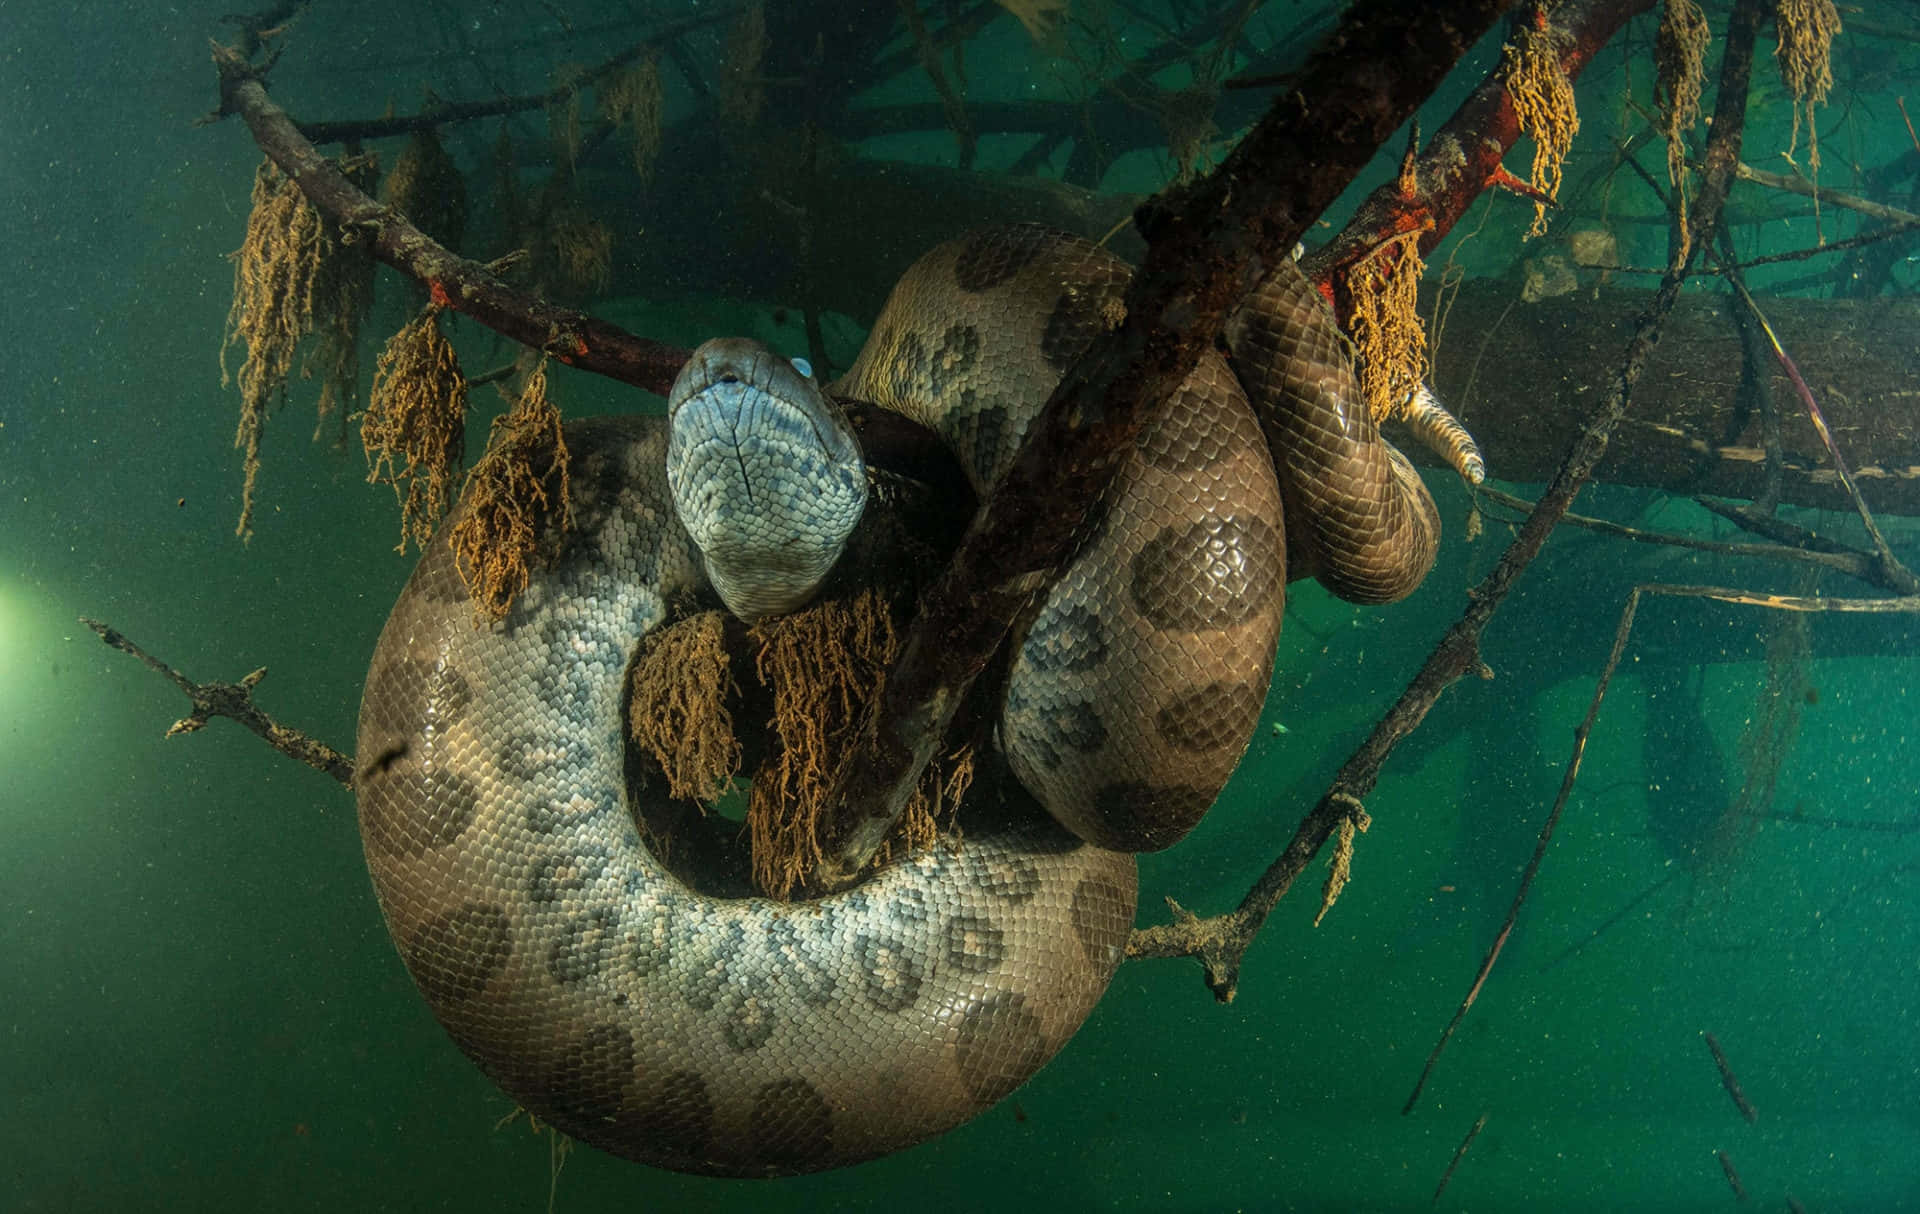 Underwater Anaconda Restingon Branches Wallpaper